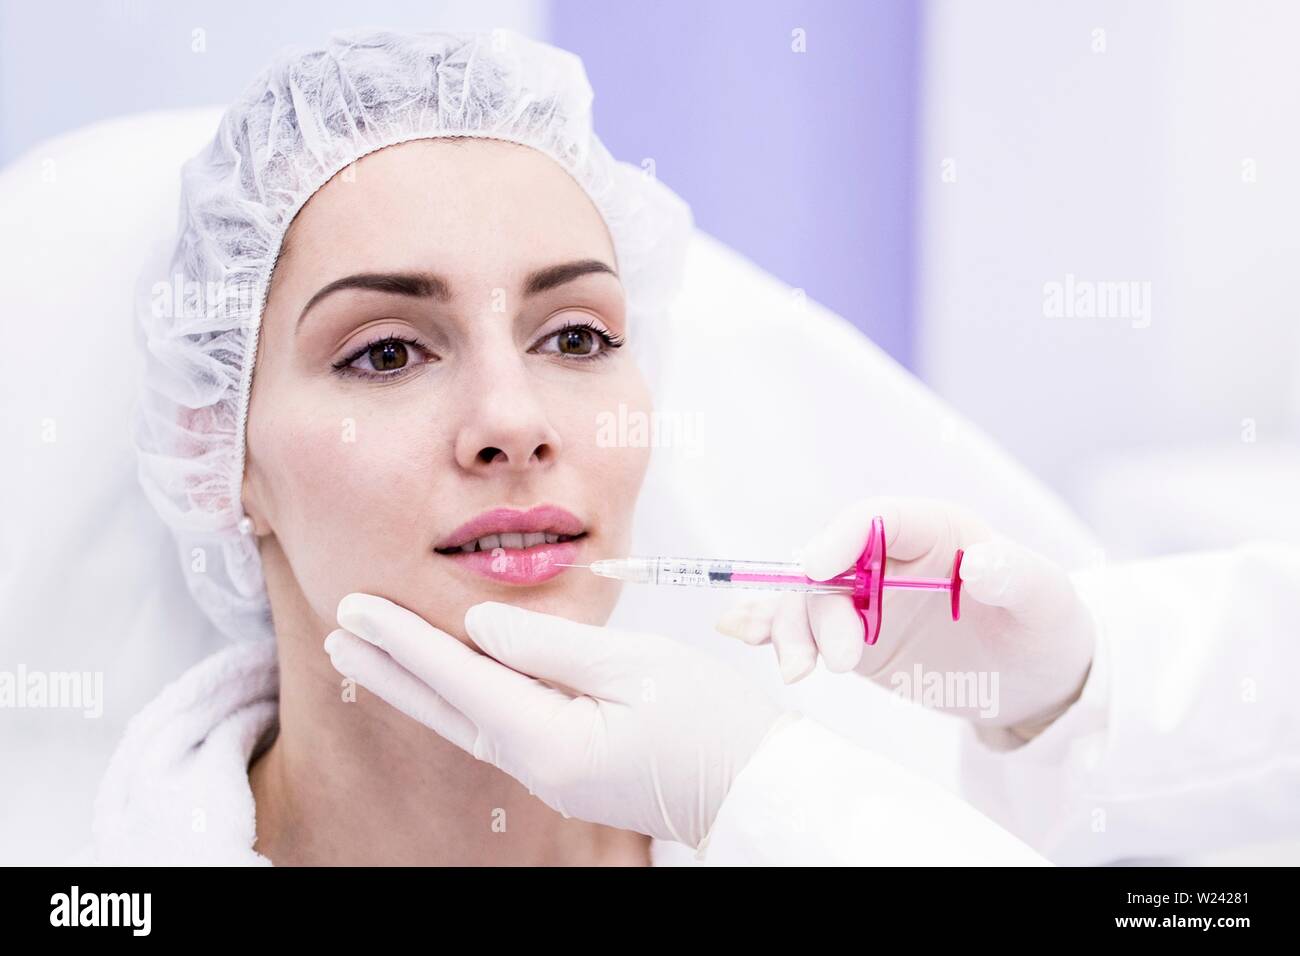 Dermatologist injecting botox injection on woman's lips, close-up. Stock Photo